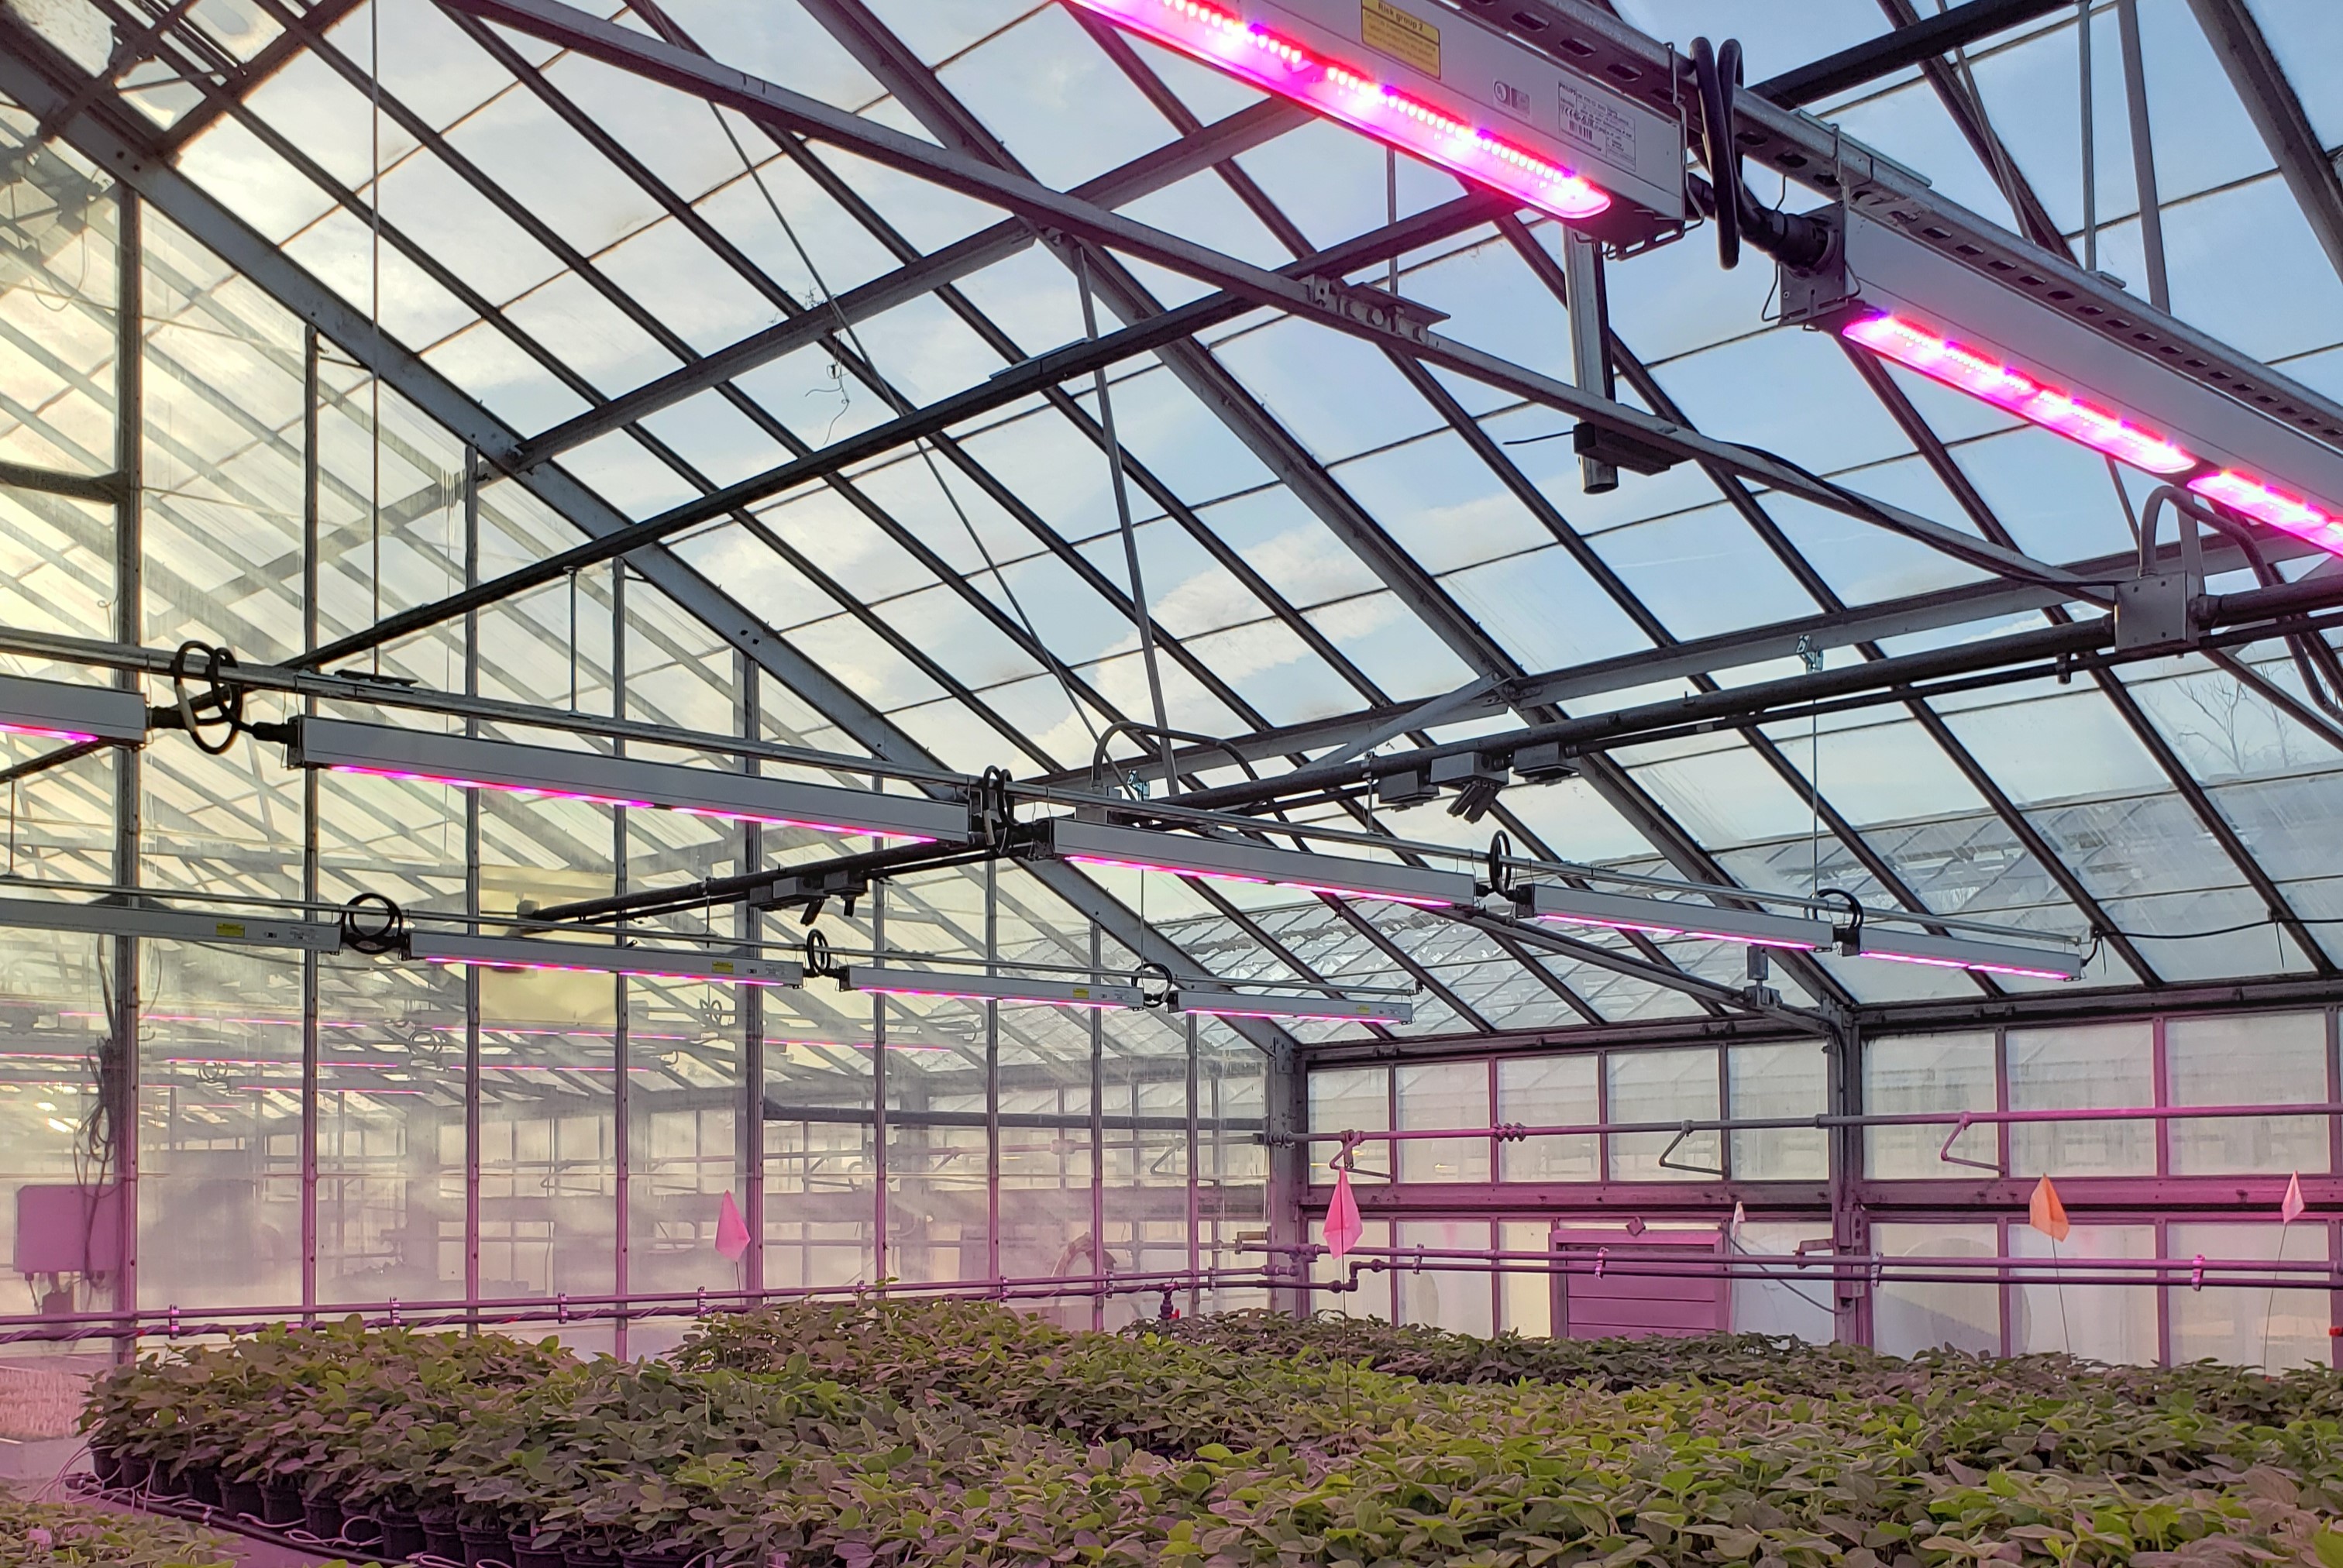 LED lighting in greenhouses